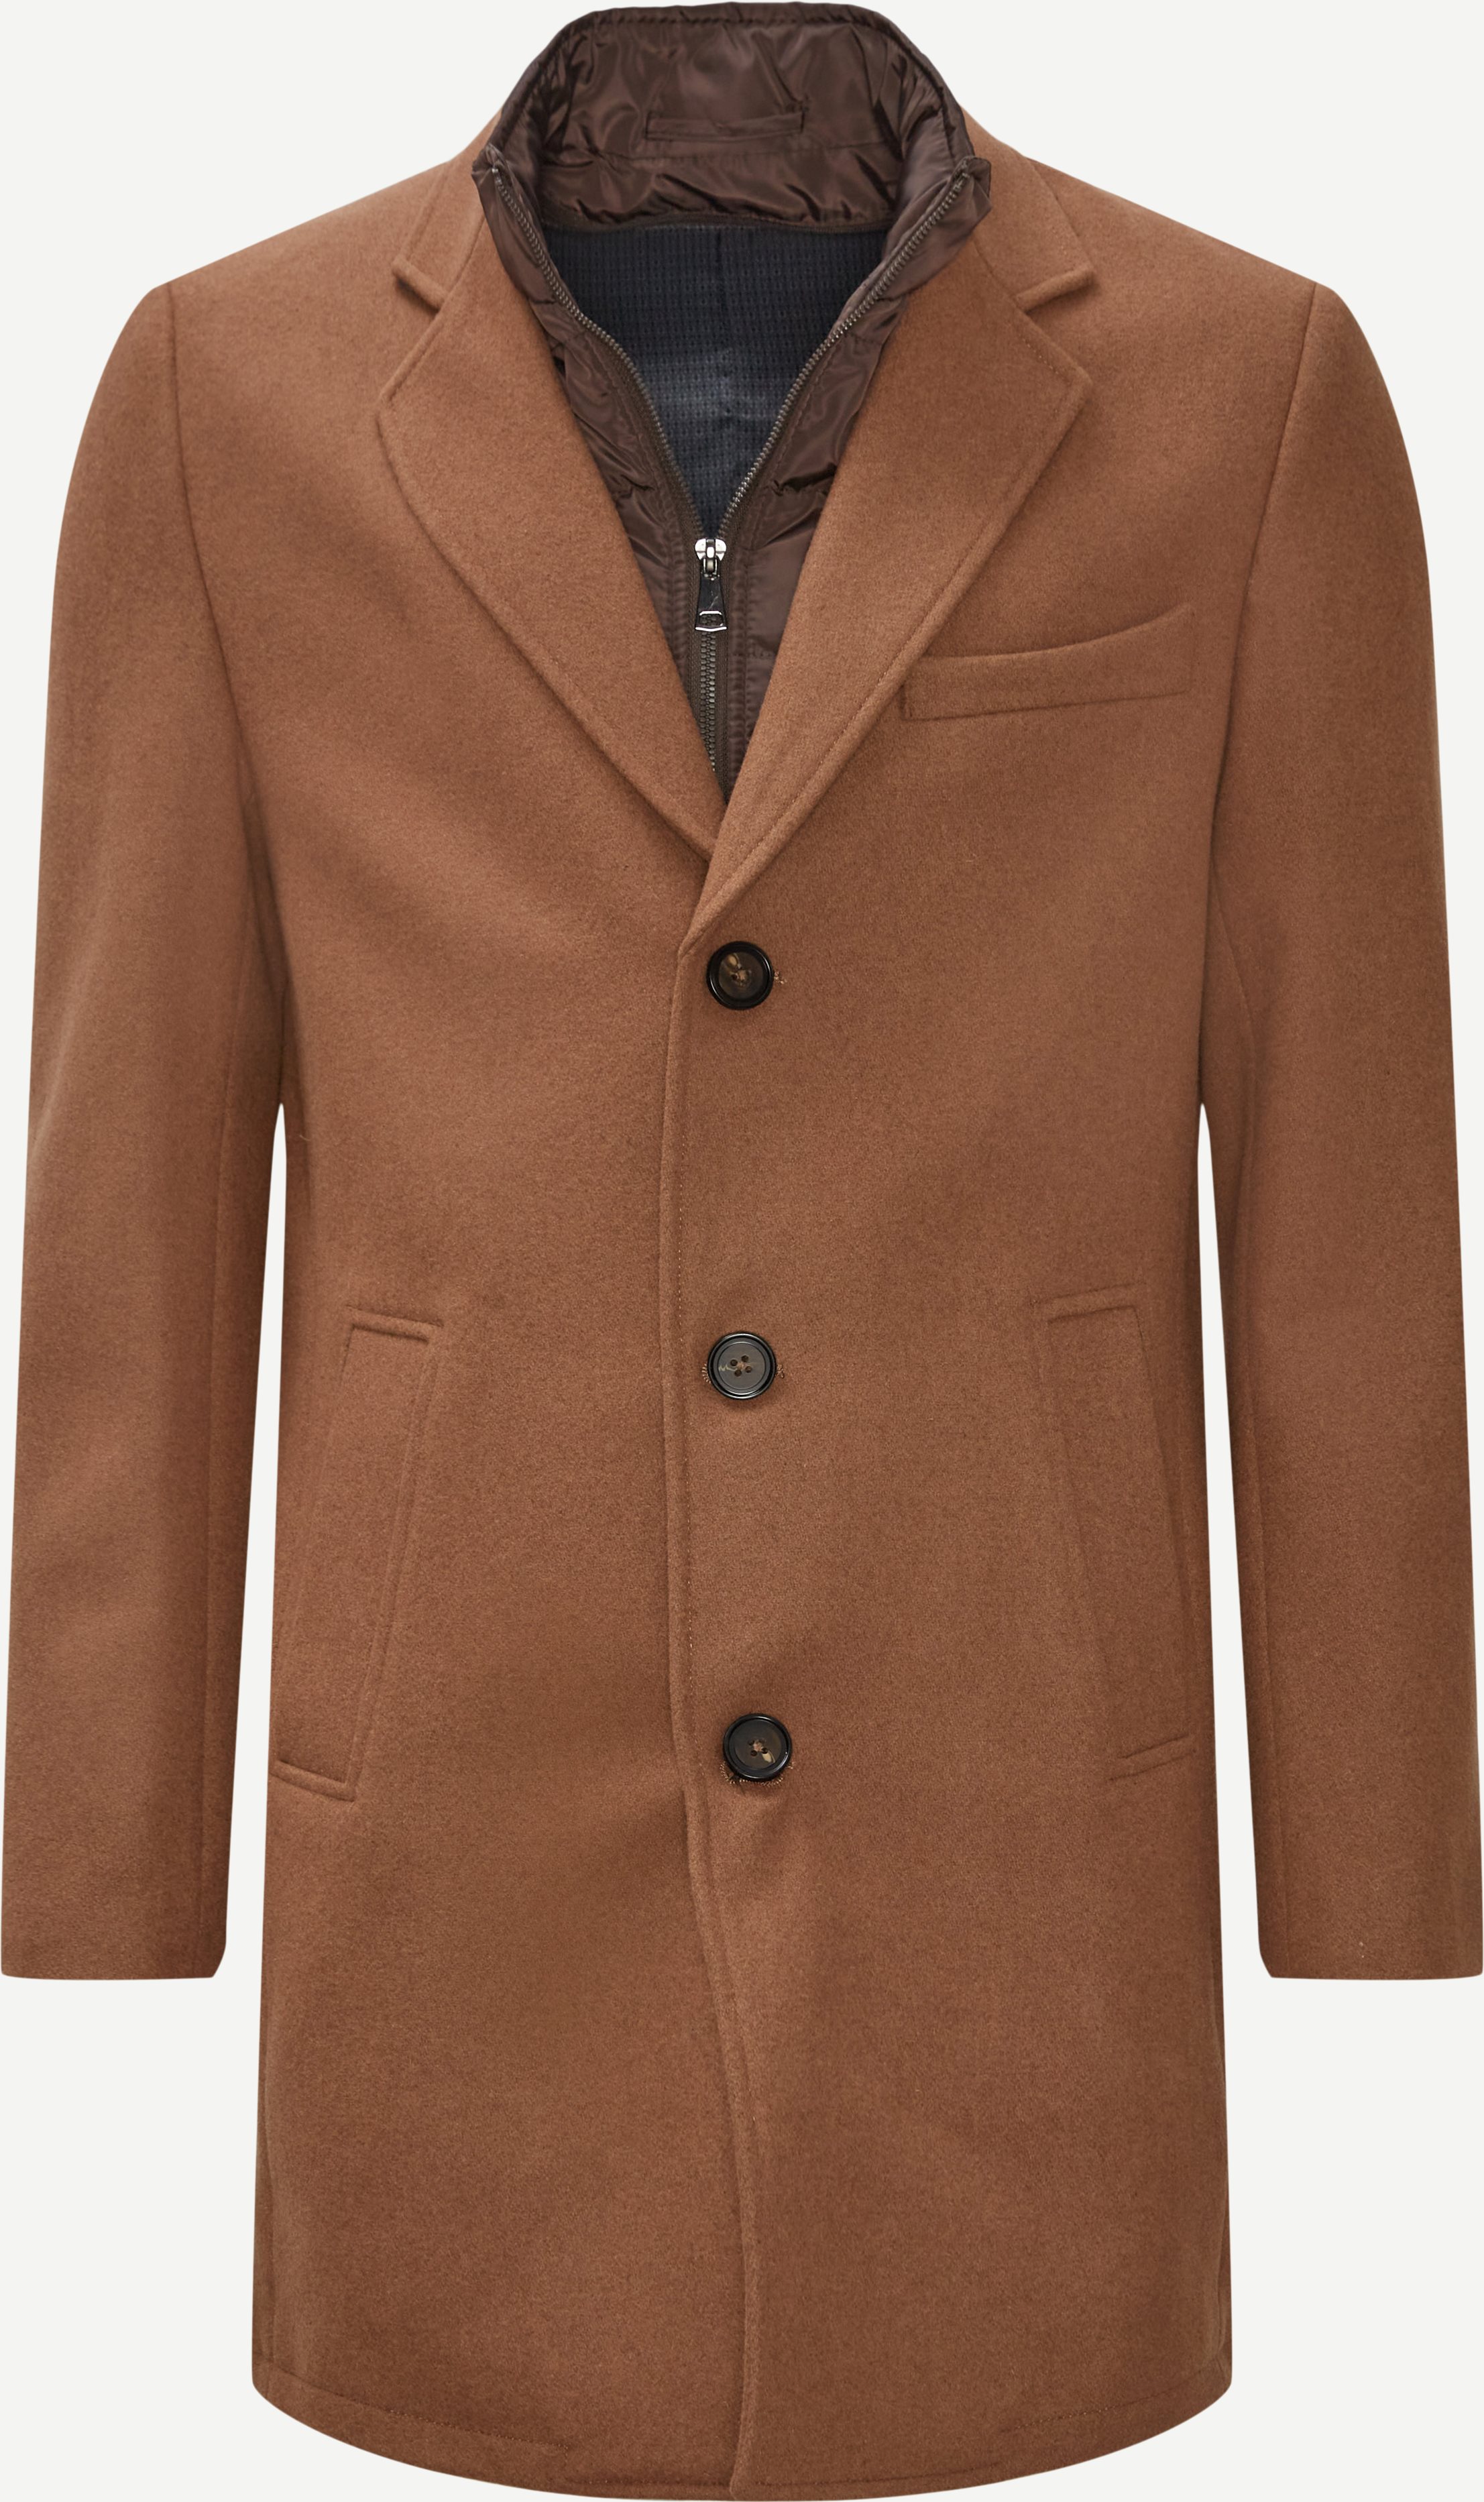 Mantel aus Colombo-Wolle - Jacken - Regular fit - Braun